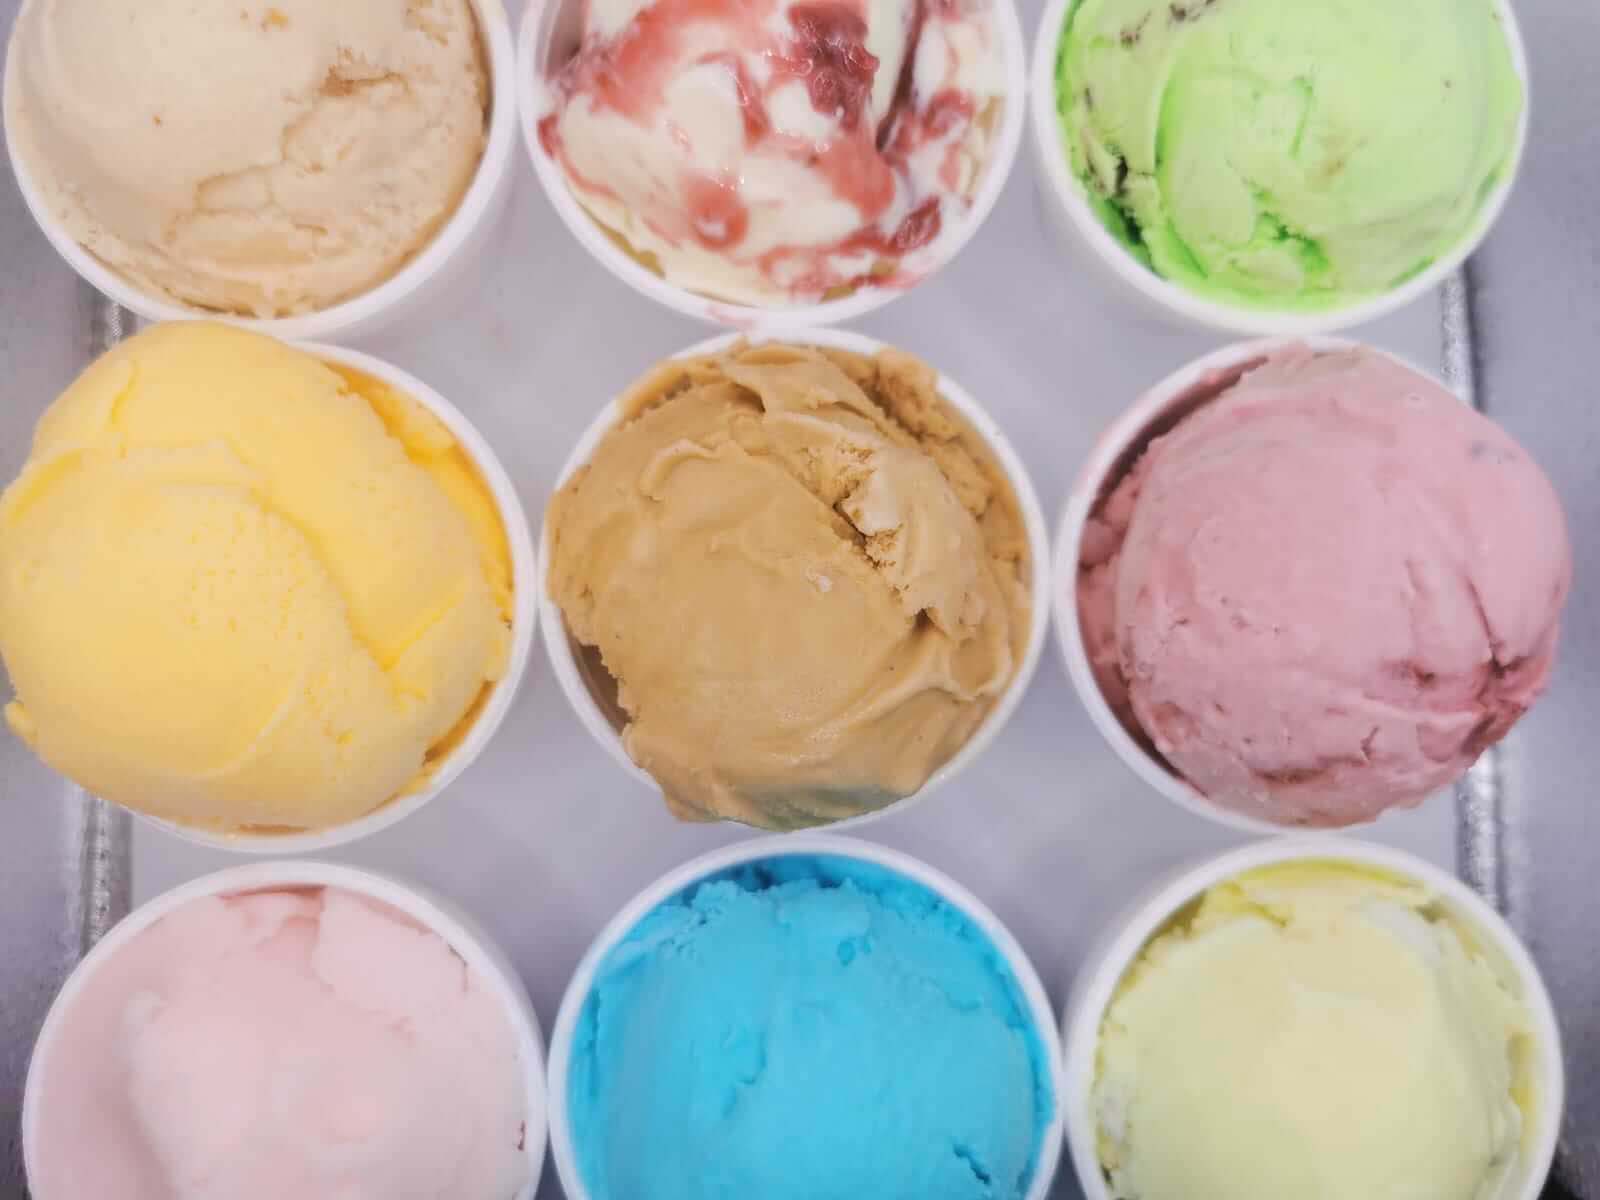 Ice cream selection